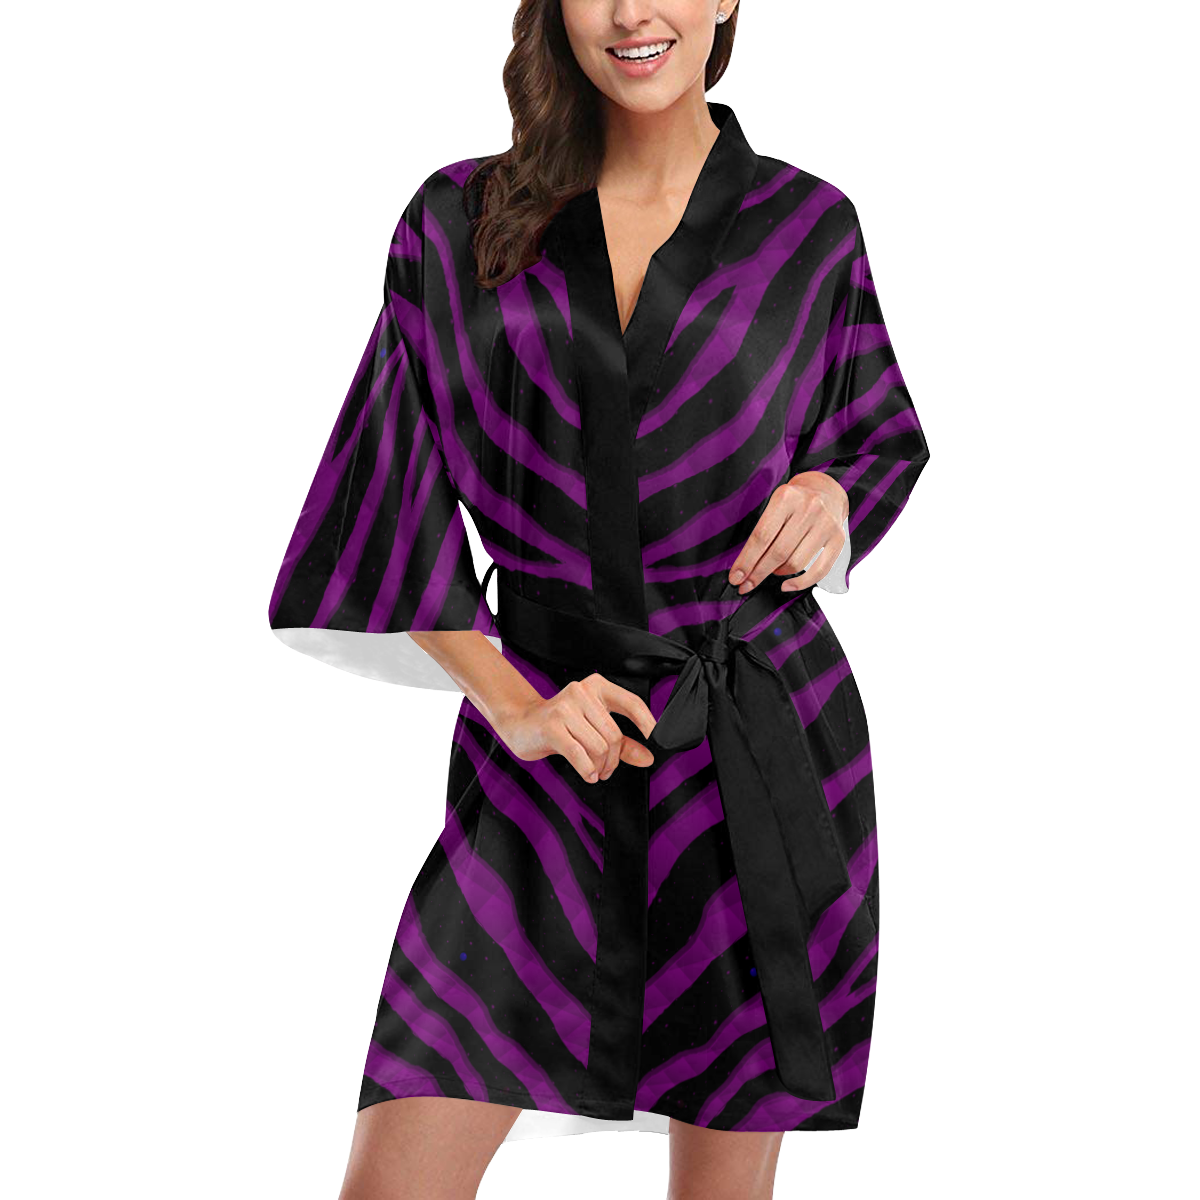 Ripped SpaceTime Stripes - Purple Kimono Robe